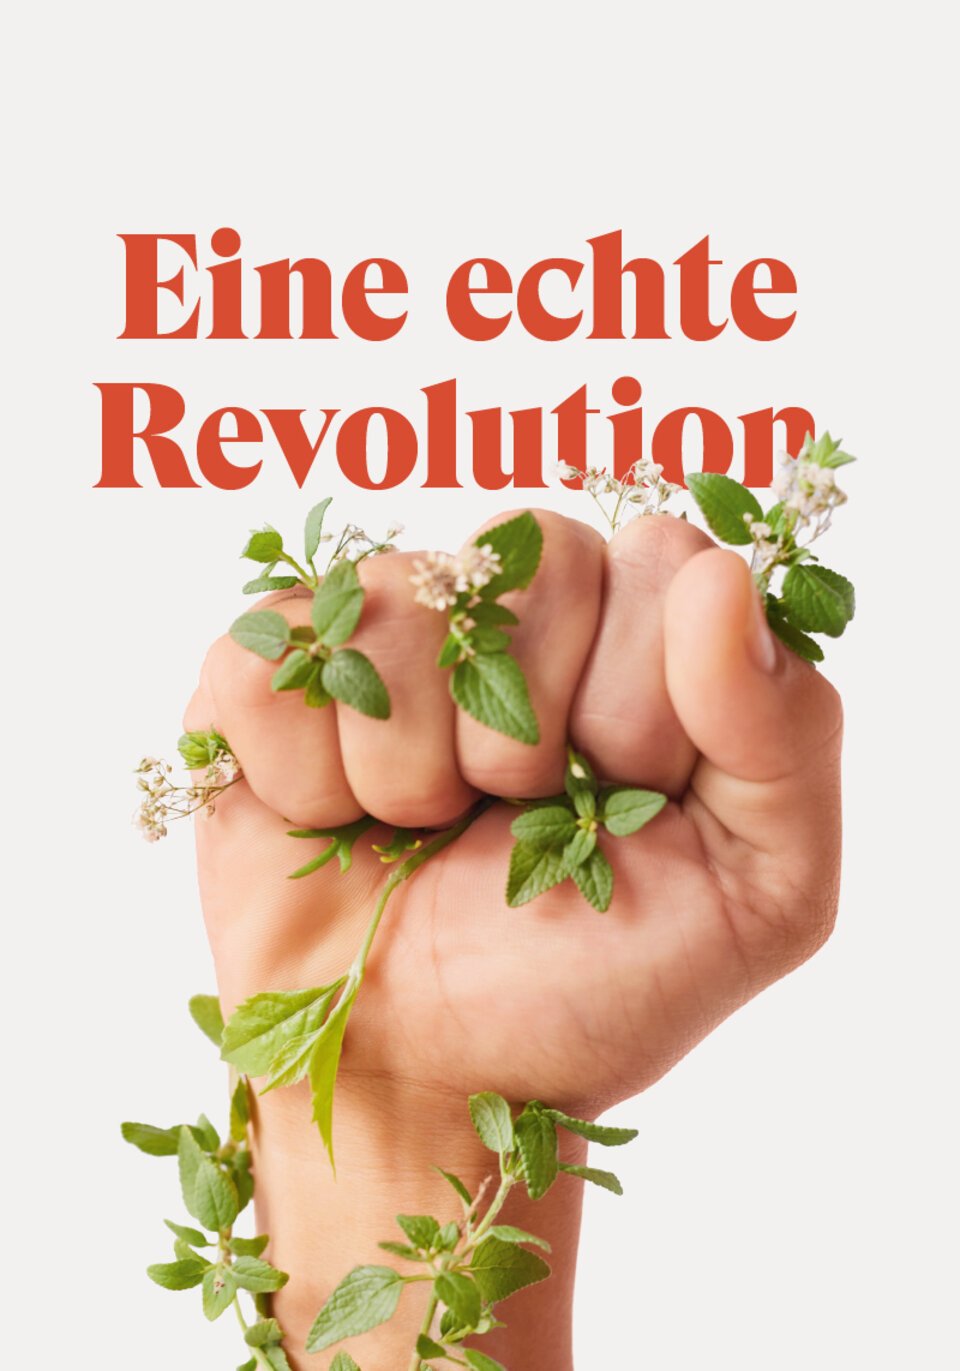 FMZ Report 2020 Revolution